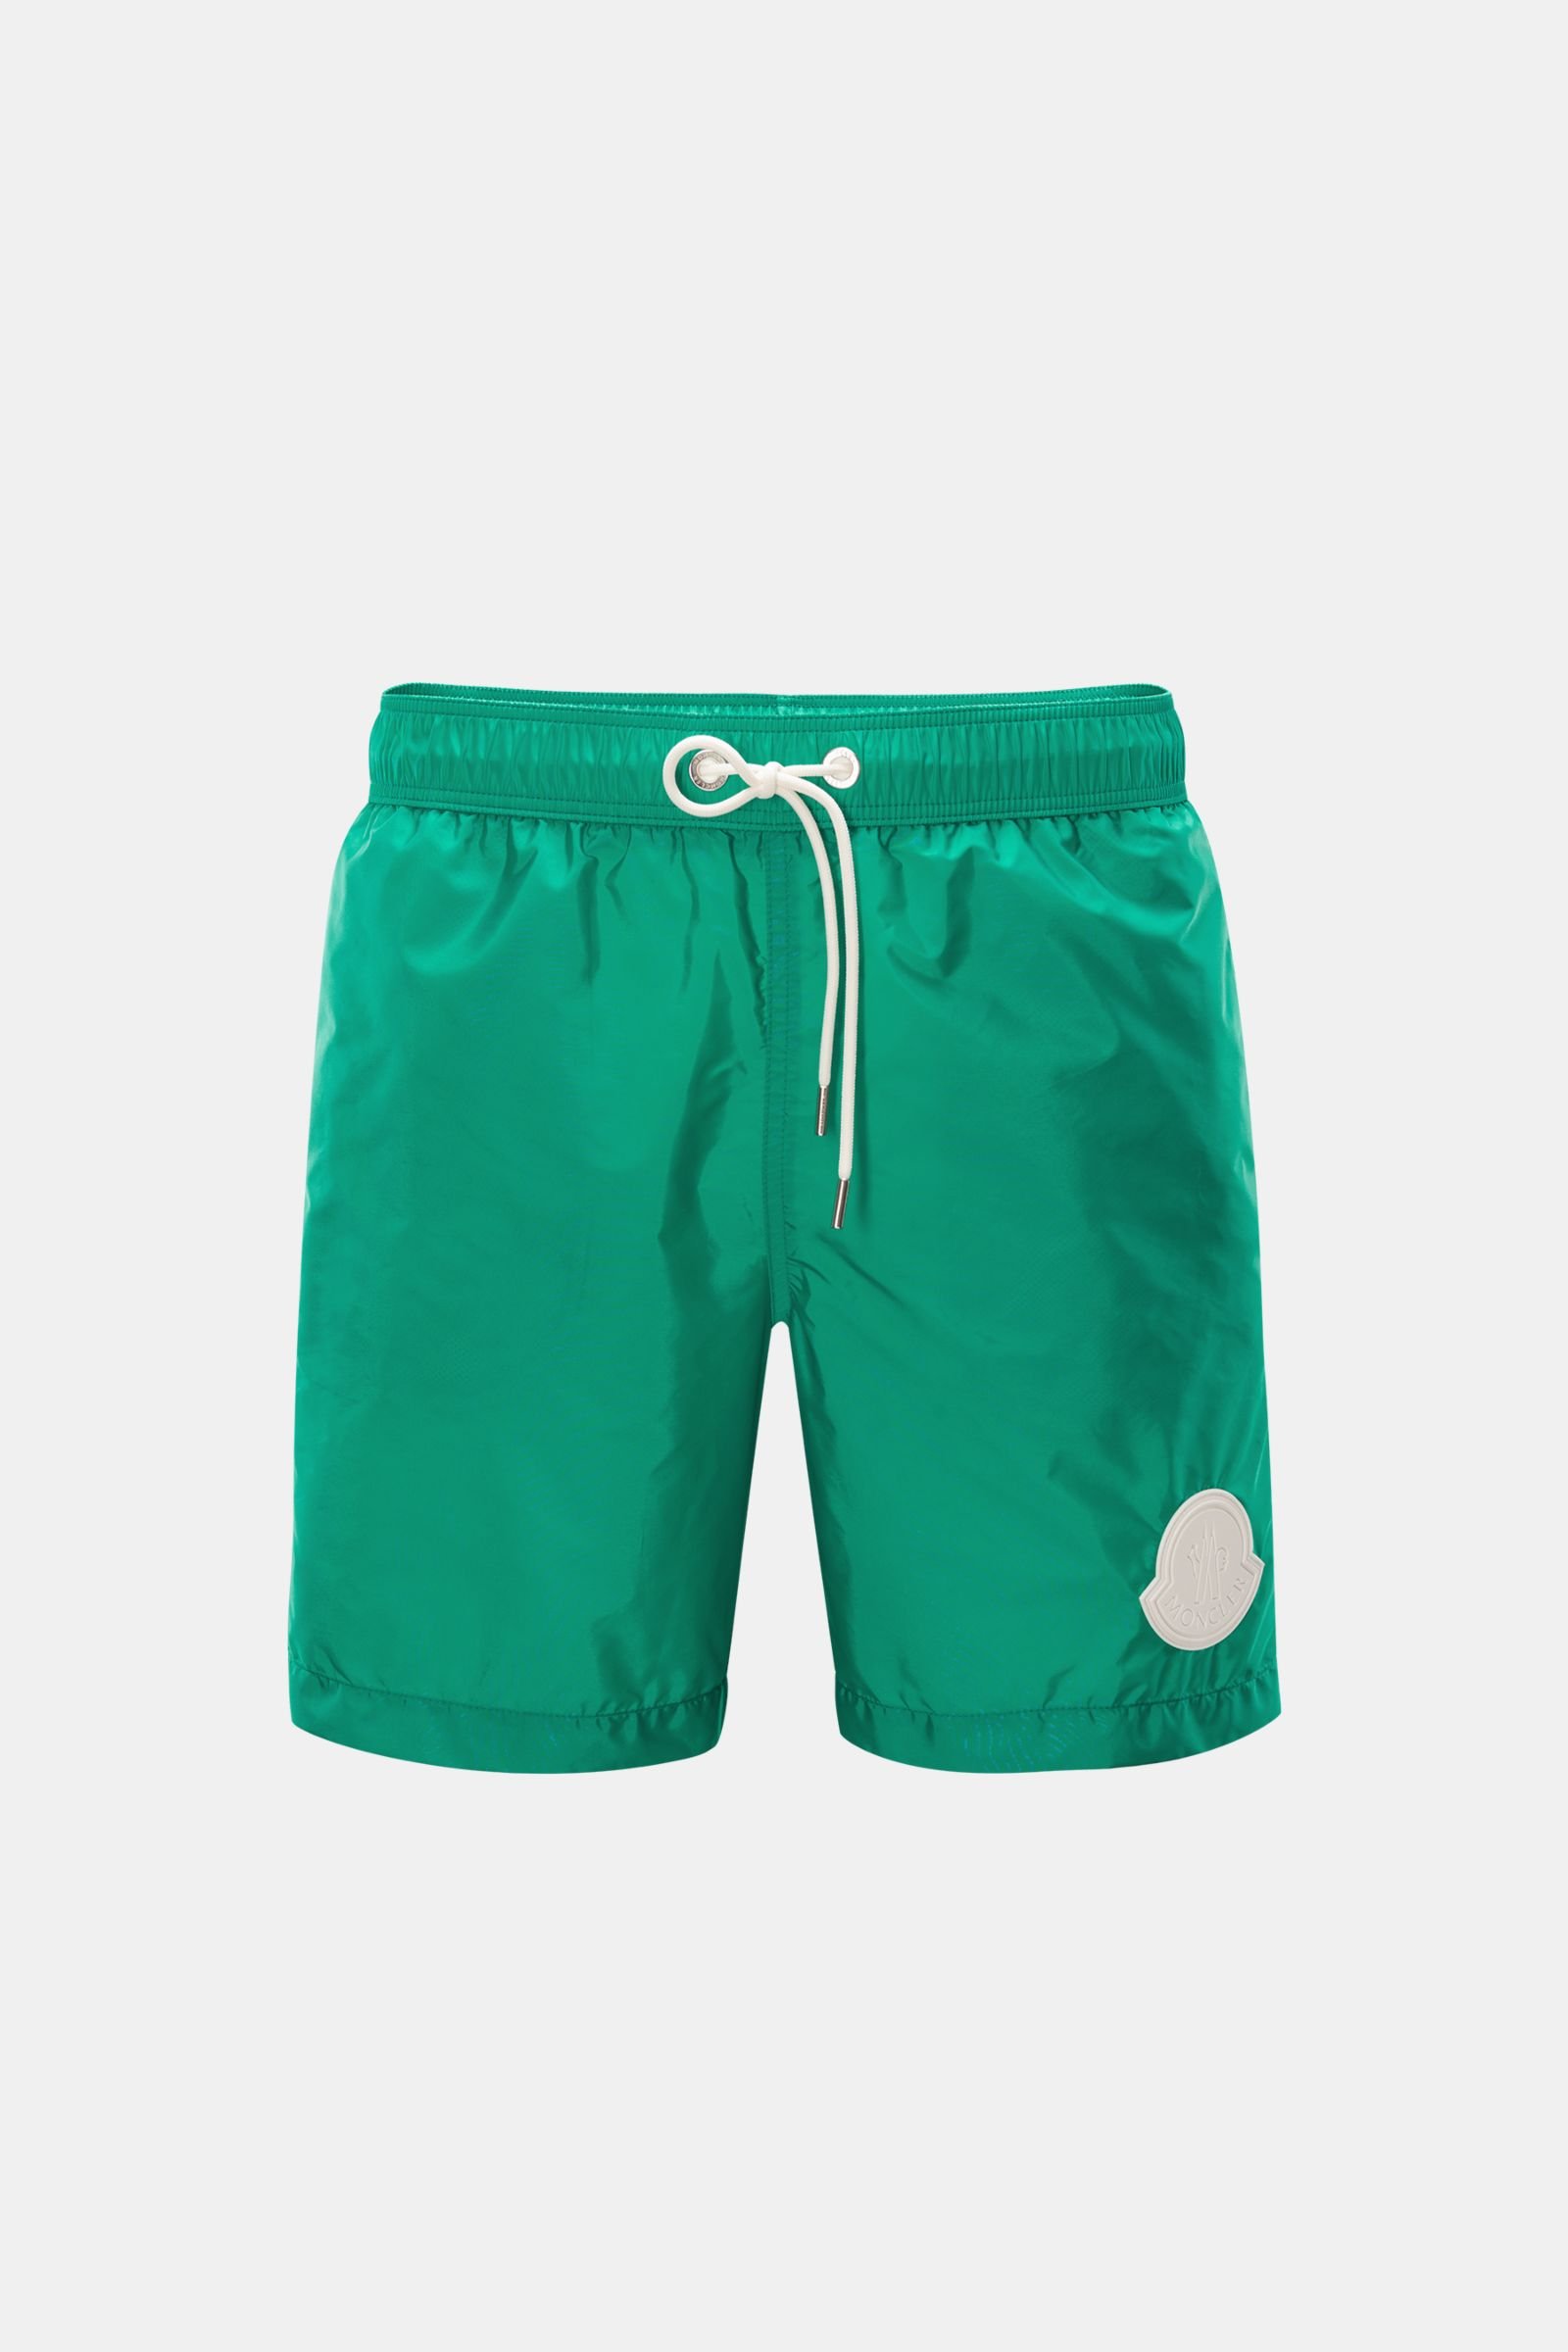 Swim shorts green